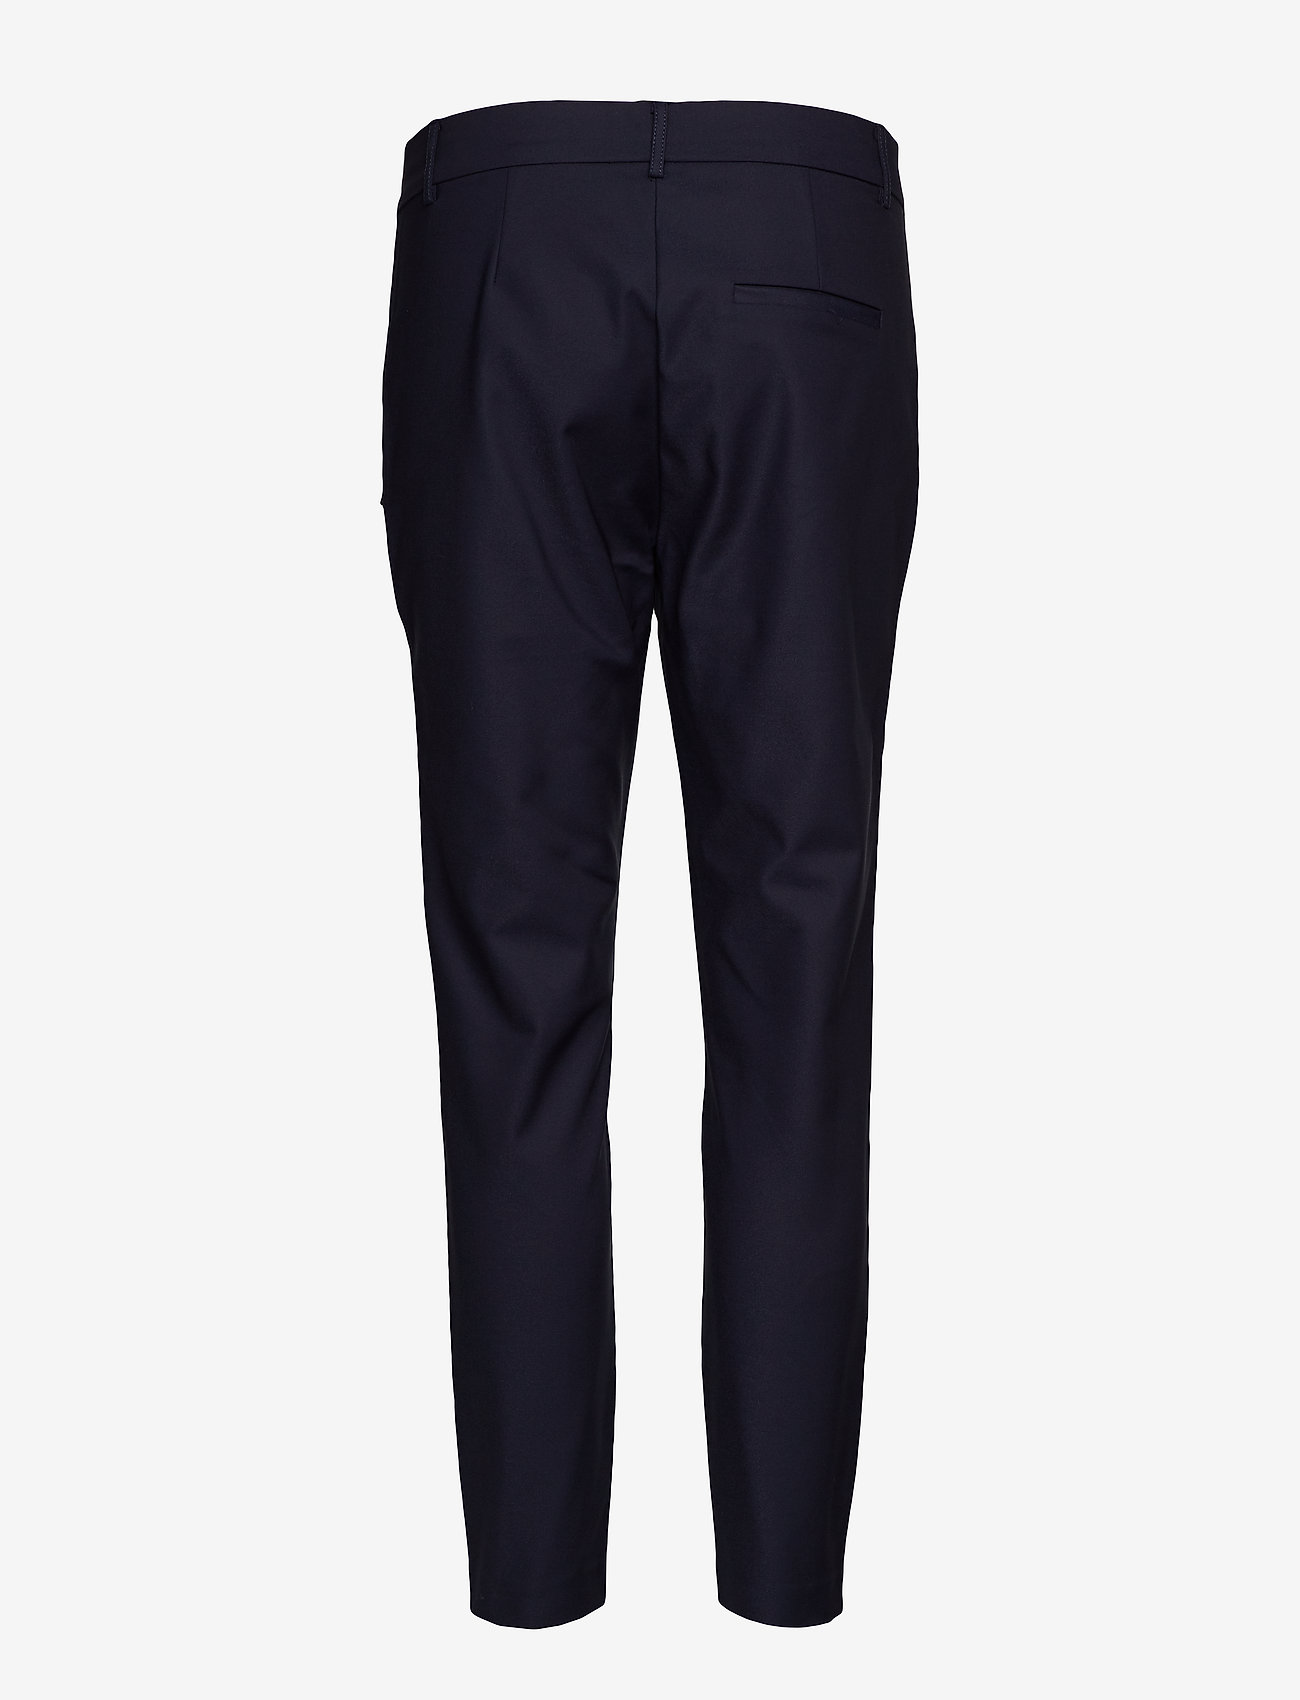 Coster Copenhagen - Pants with zipper pockets - Julia - formell - night sky blue - 1